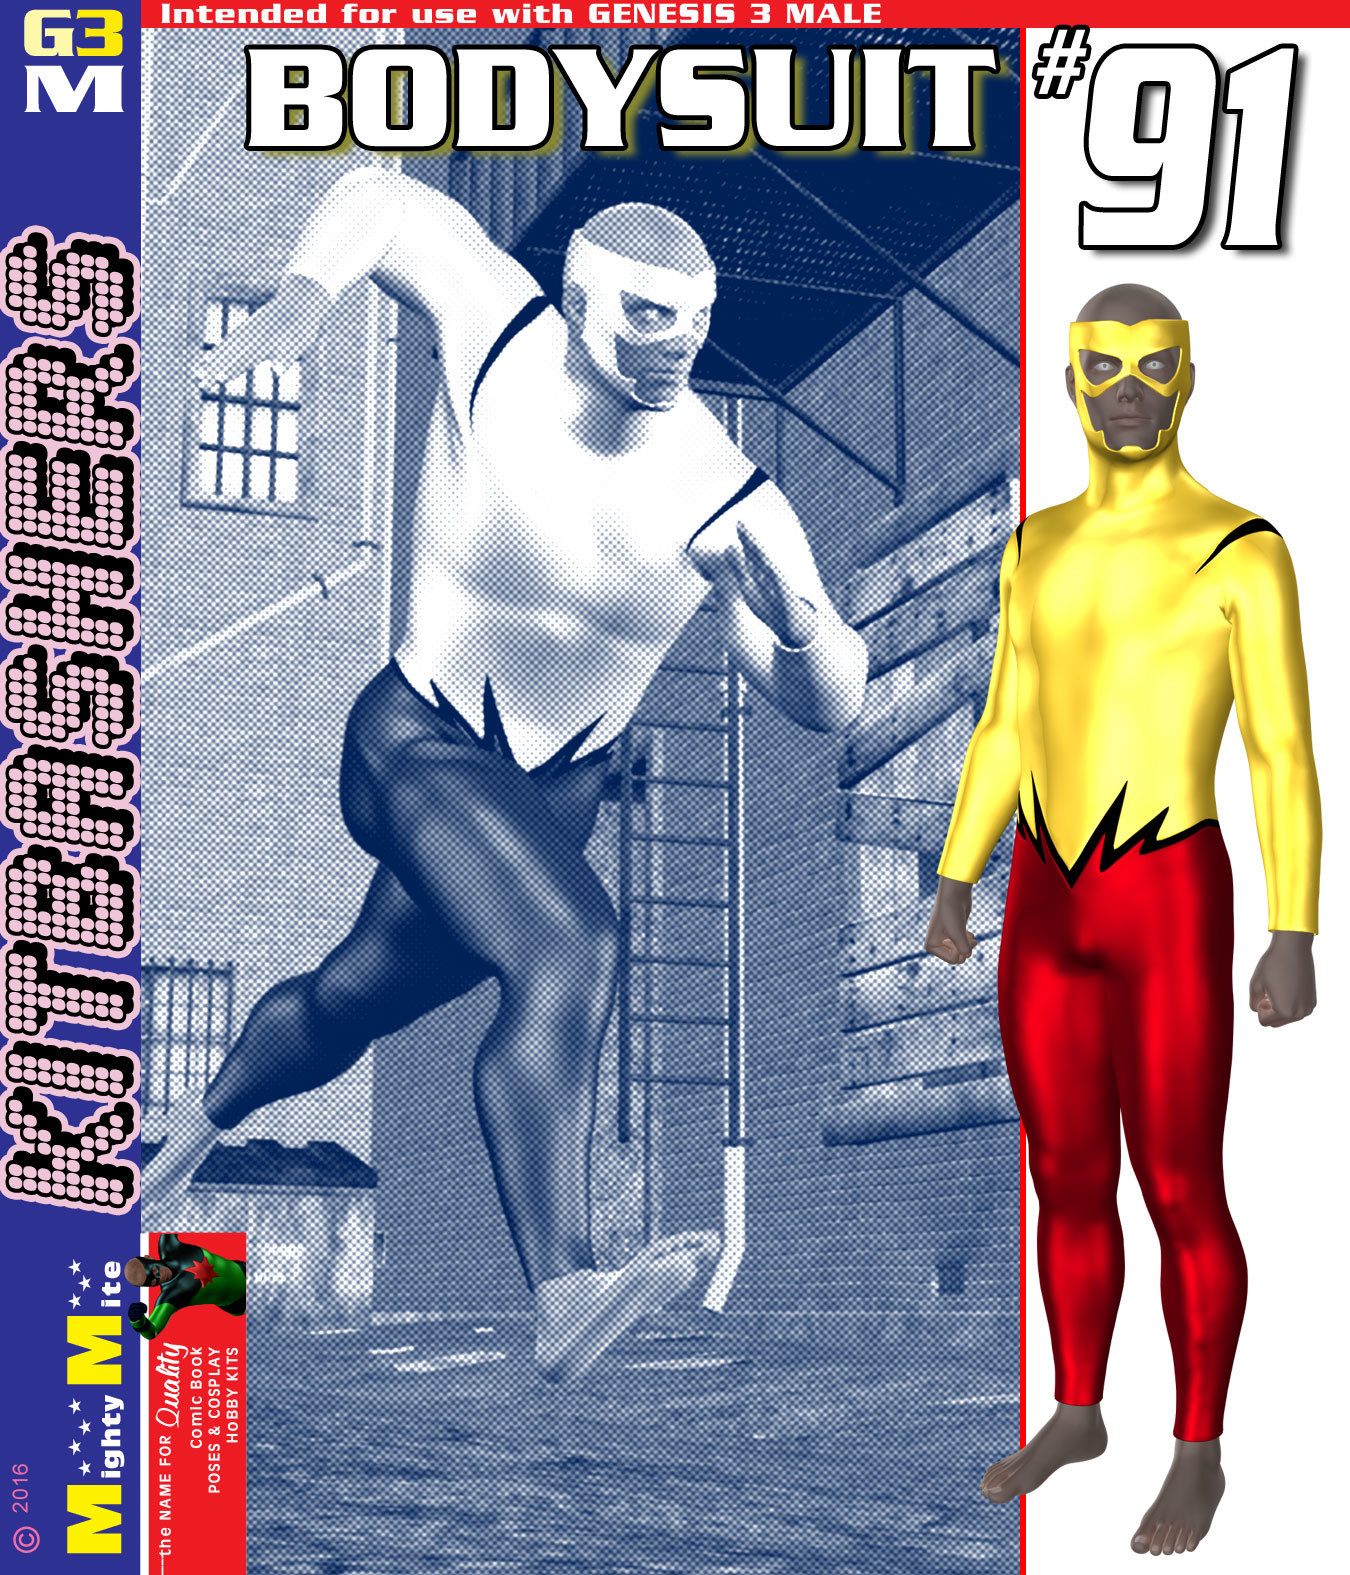 Bodysuit 091 MMKBG3M by: MightyMite, 3D Models by Daz 3D